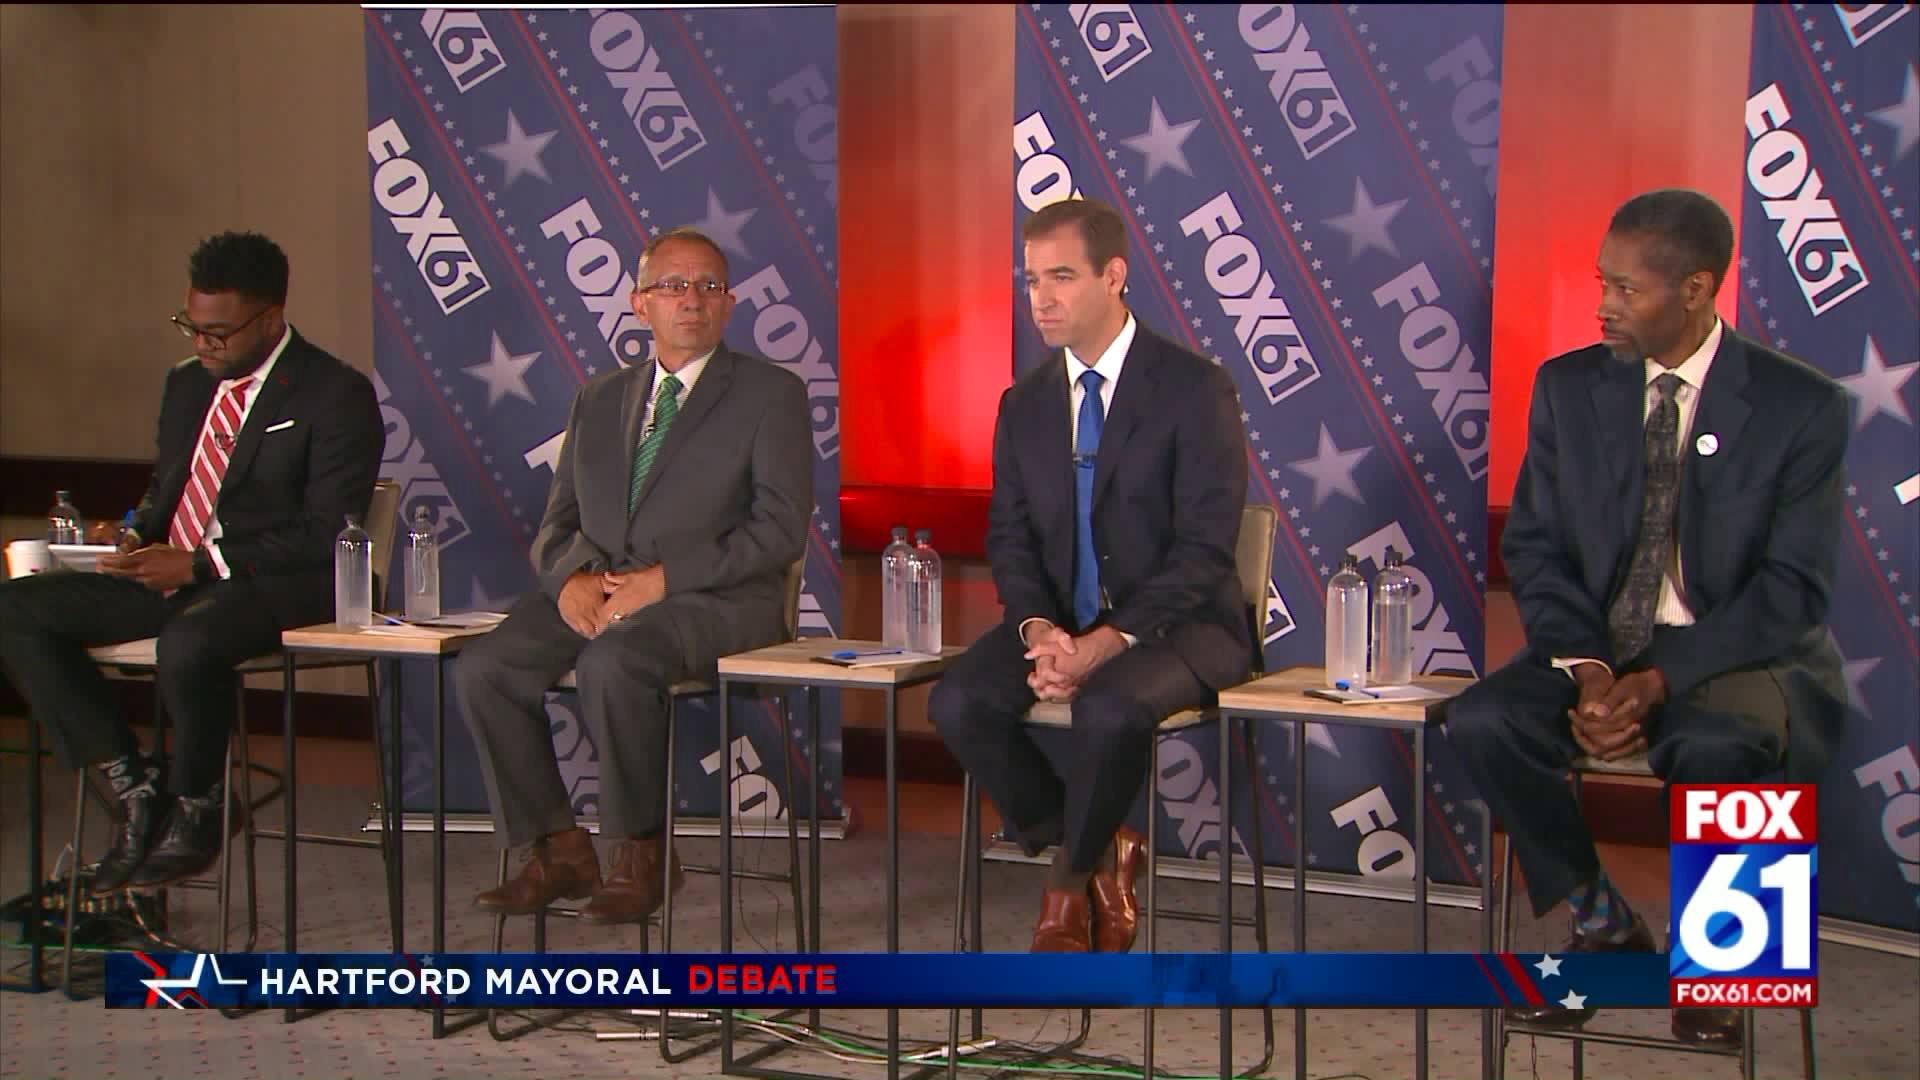 Hartford Mayoral Debate: Should Hartford have a casino?